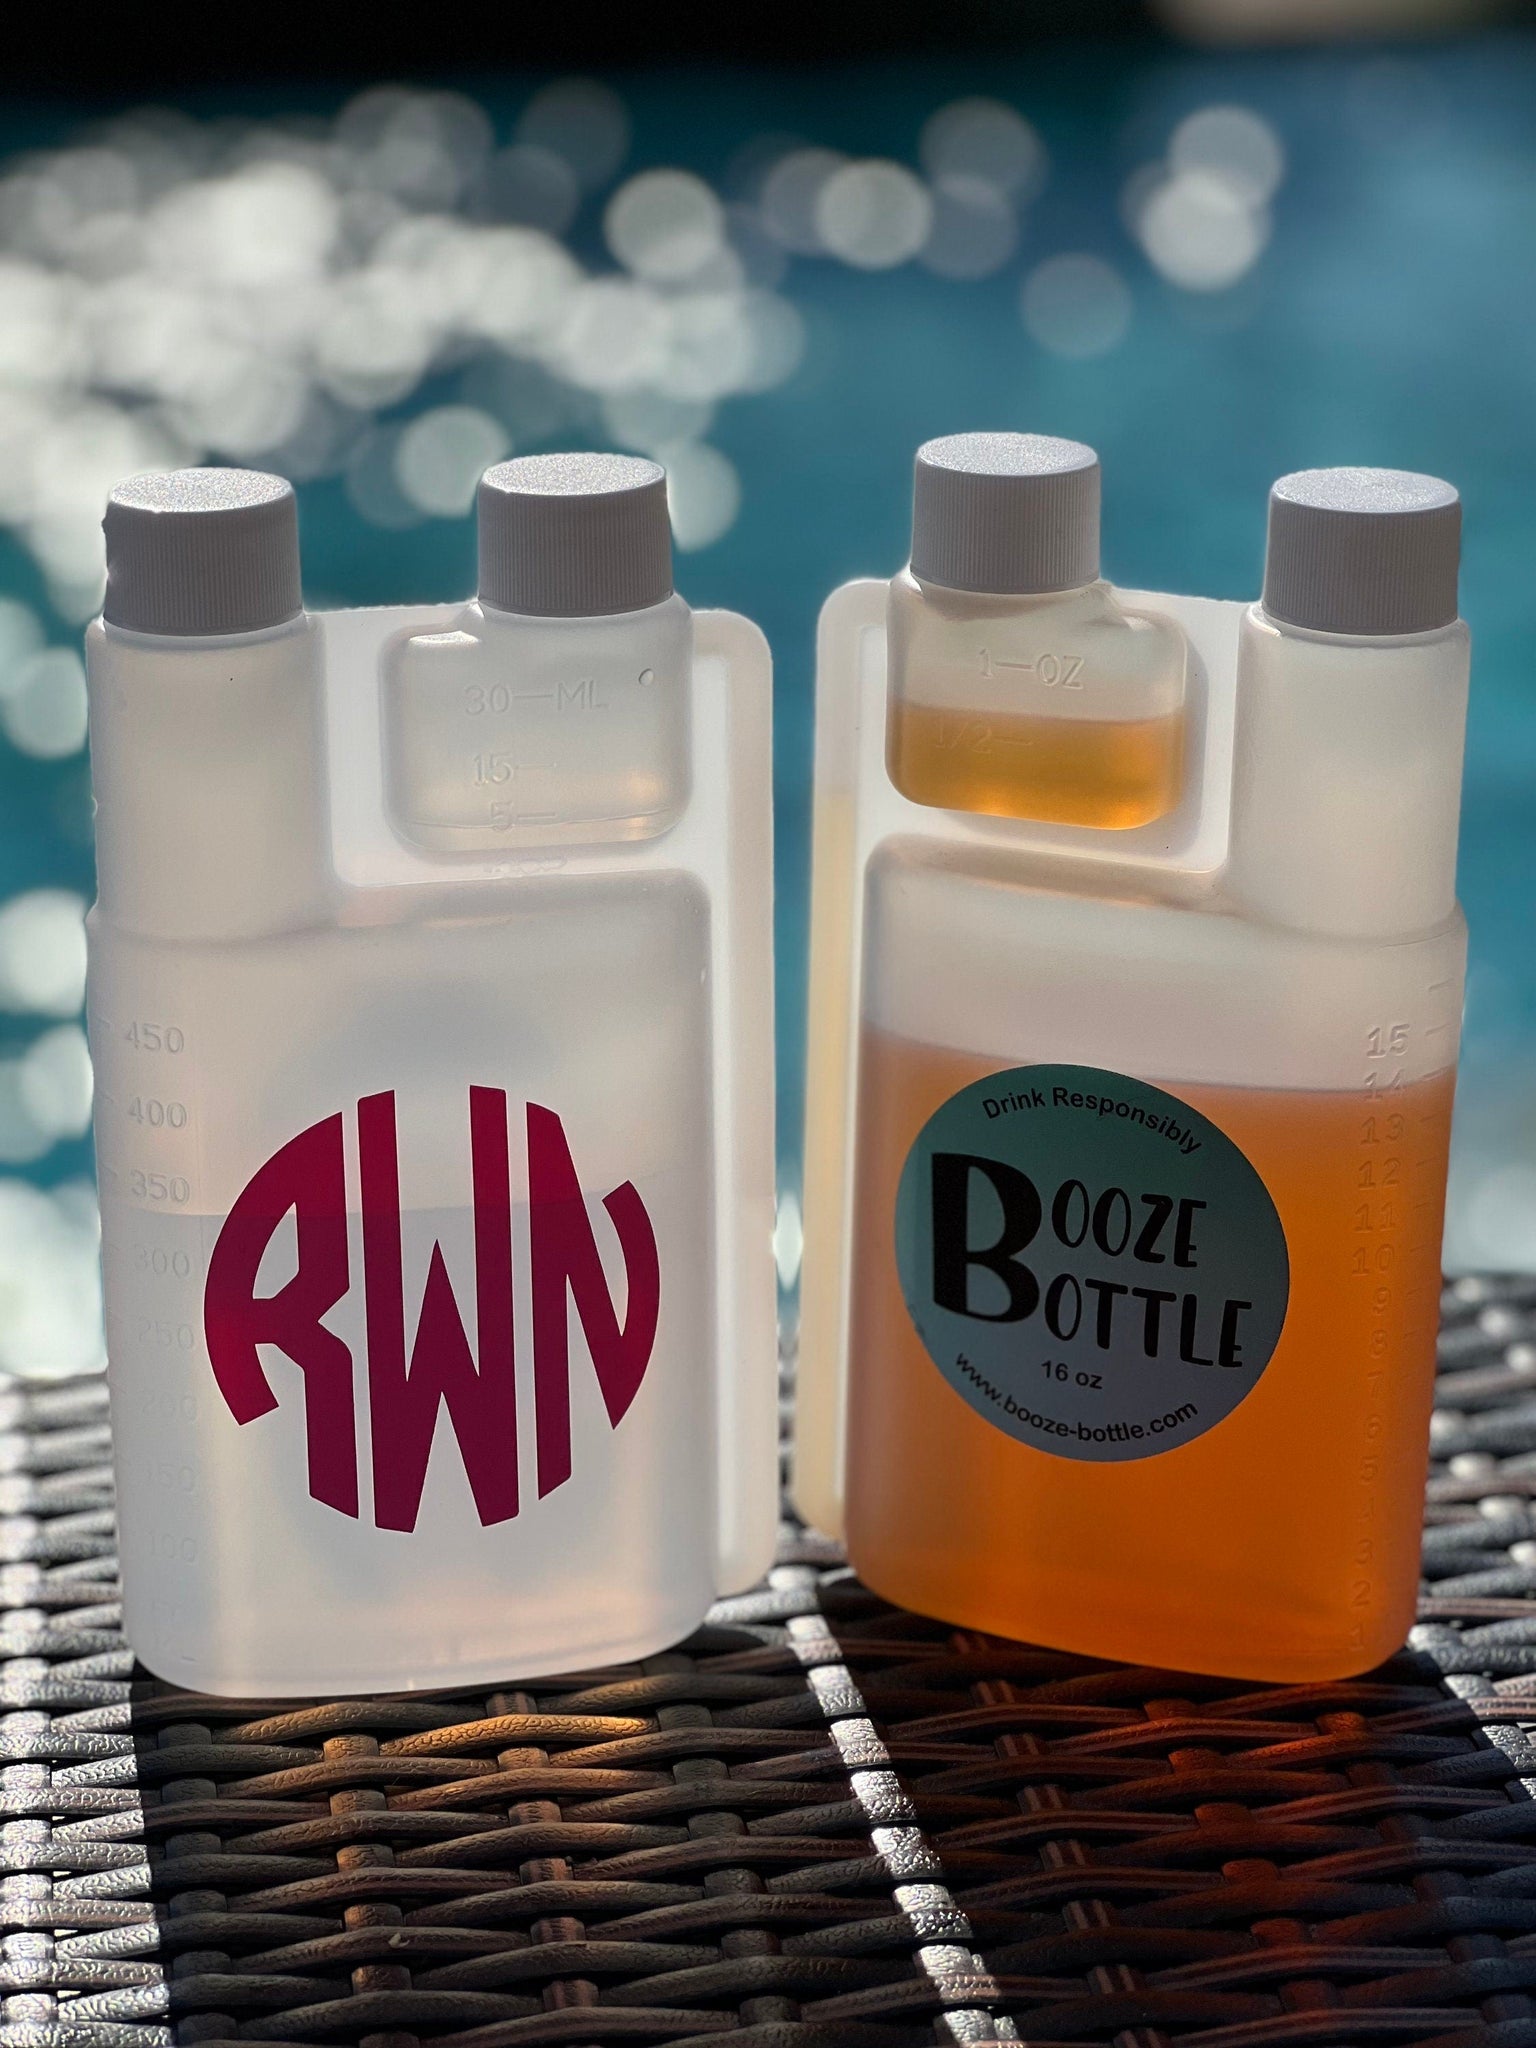 8 oz Booze Bottles - The Ultimate Liquor Storage Flask & Shot